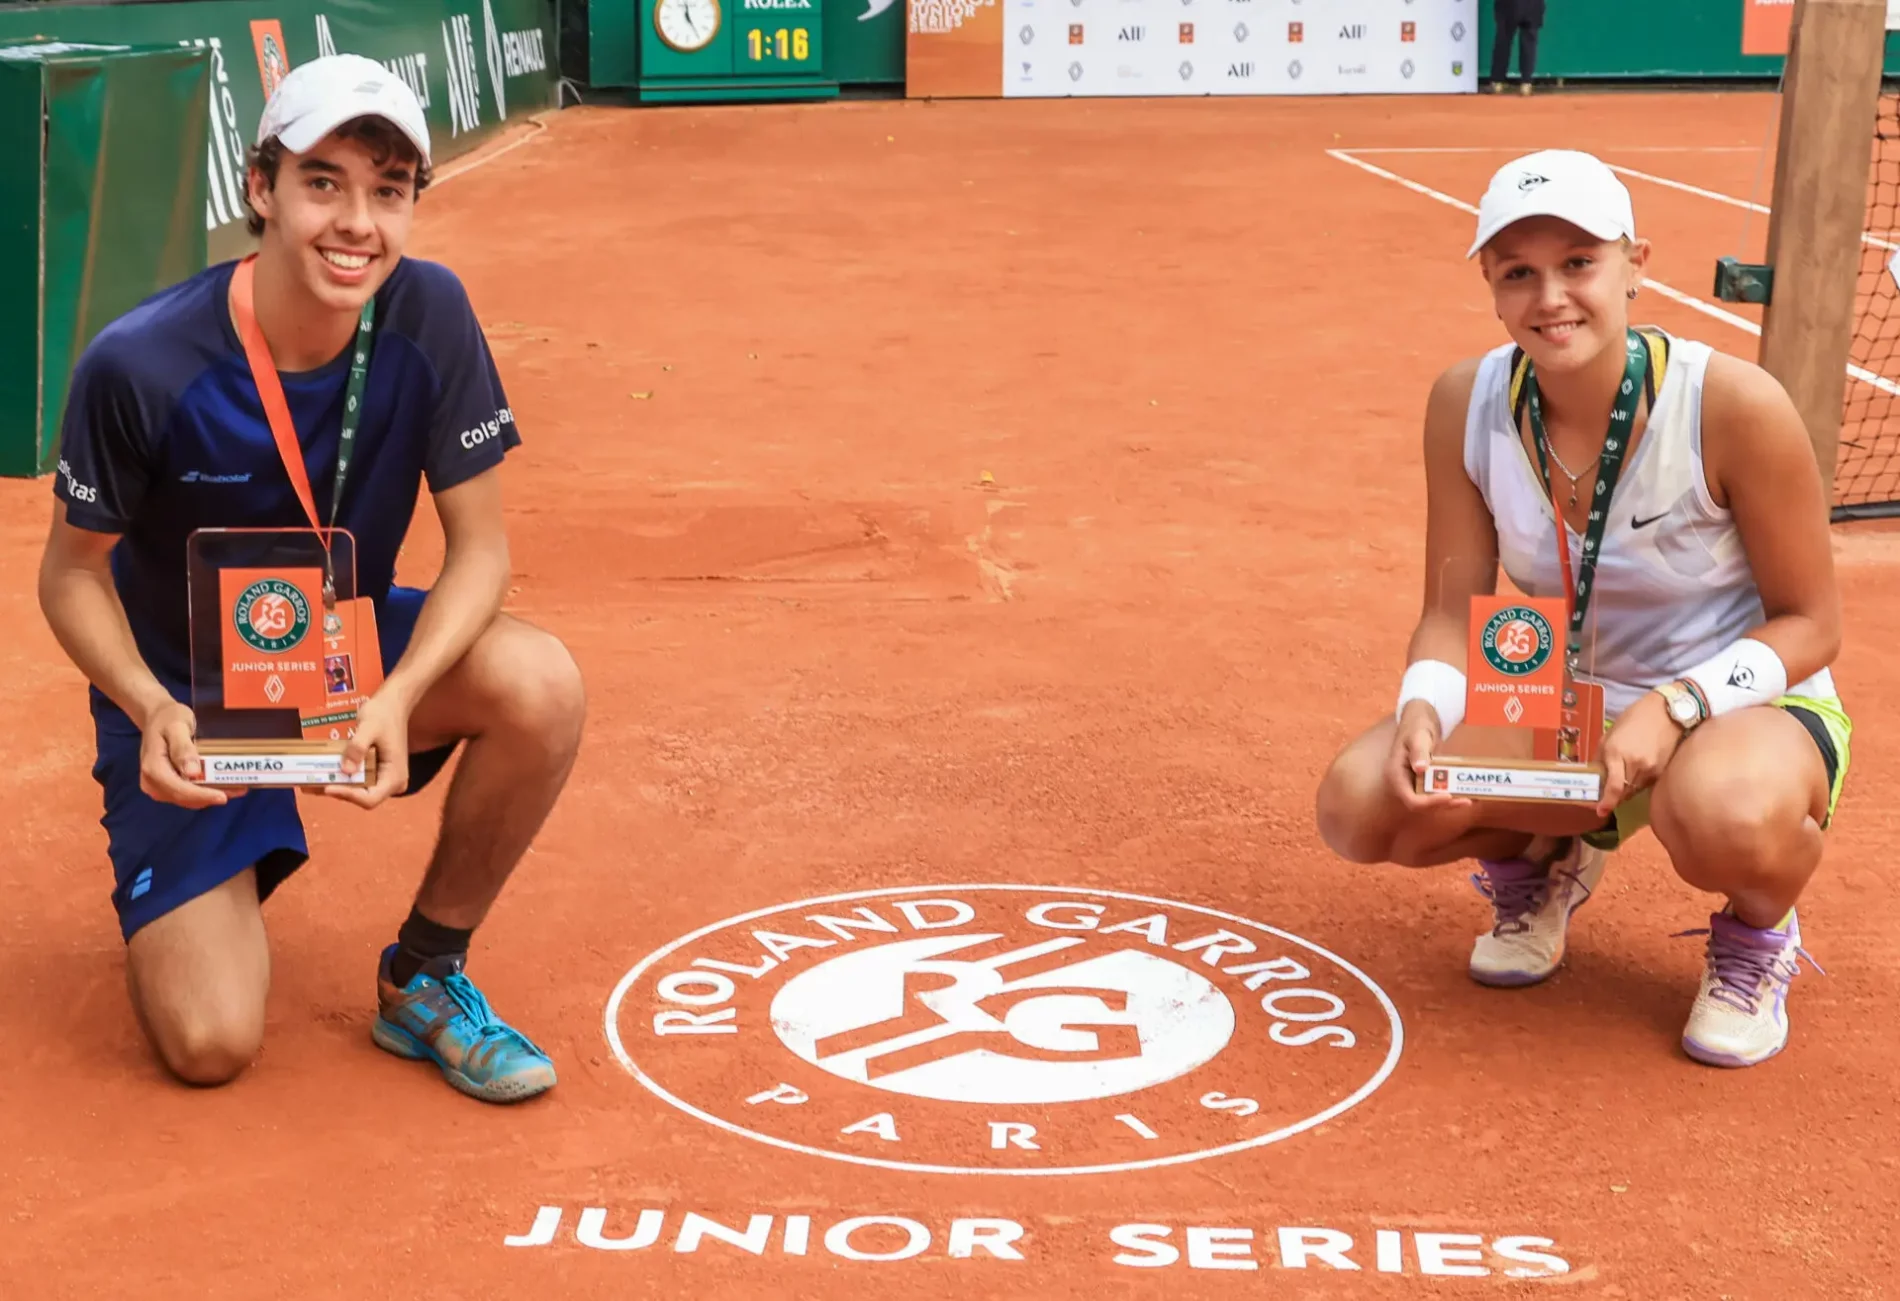 Roland Garros Junior Series